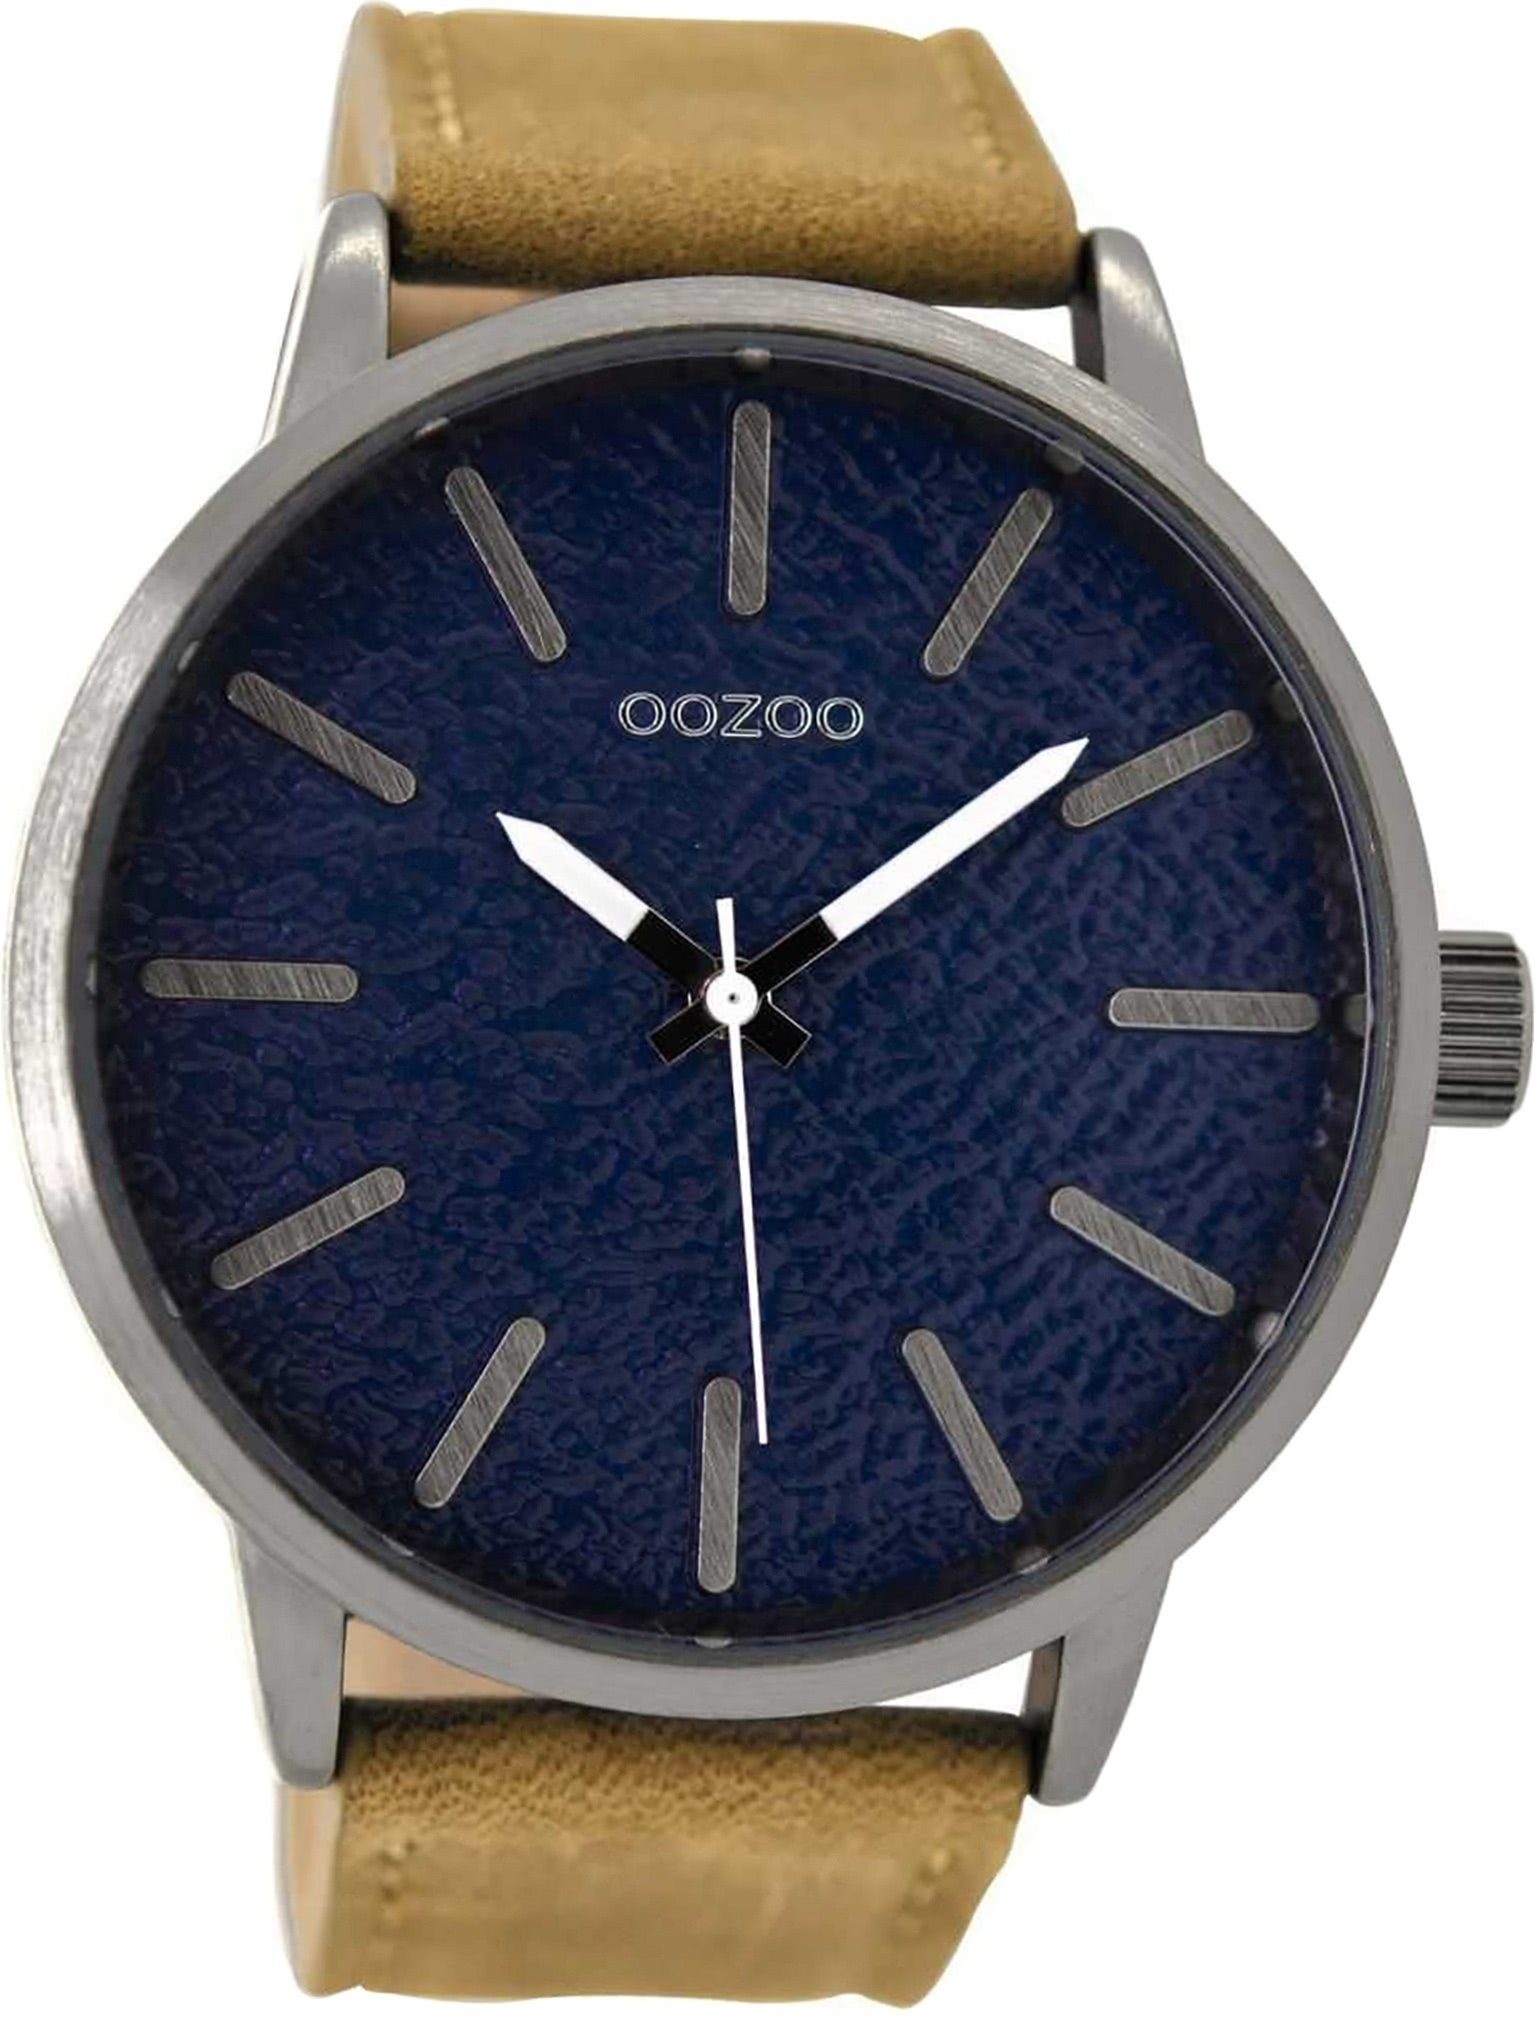 OOZOO Quarzuhr Oozoo rundes Herrenuhr Lederarmband (ca. C9026 Quarzuhr, extra braun, Leder 48mm) Herren Gehäuse, groß Uhr